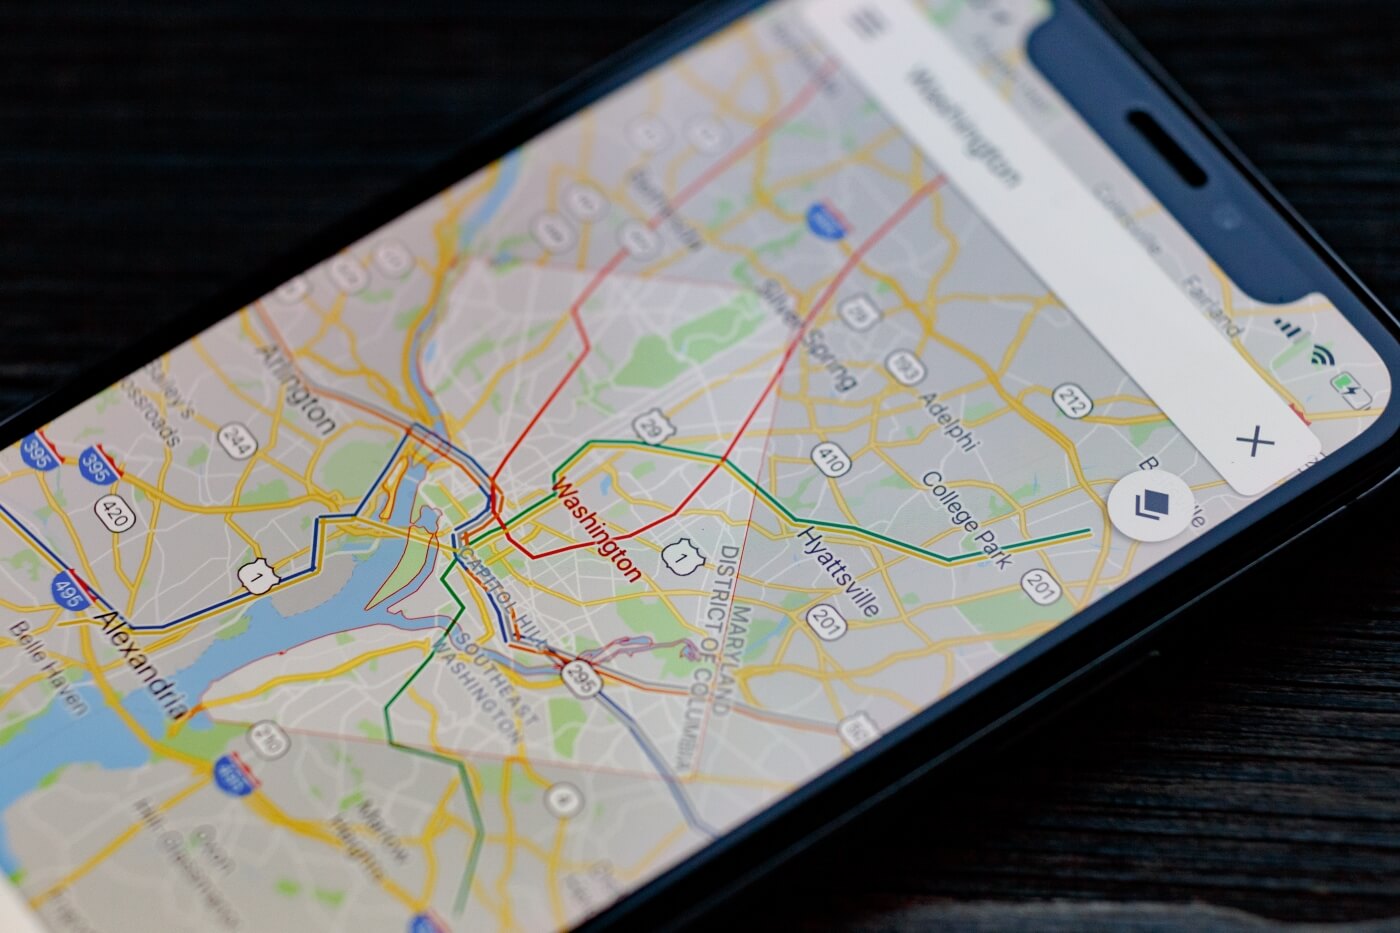 Artist uses 99 smartphones to create virtual traffic jams in Google Maps